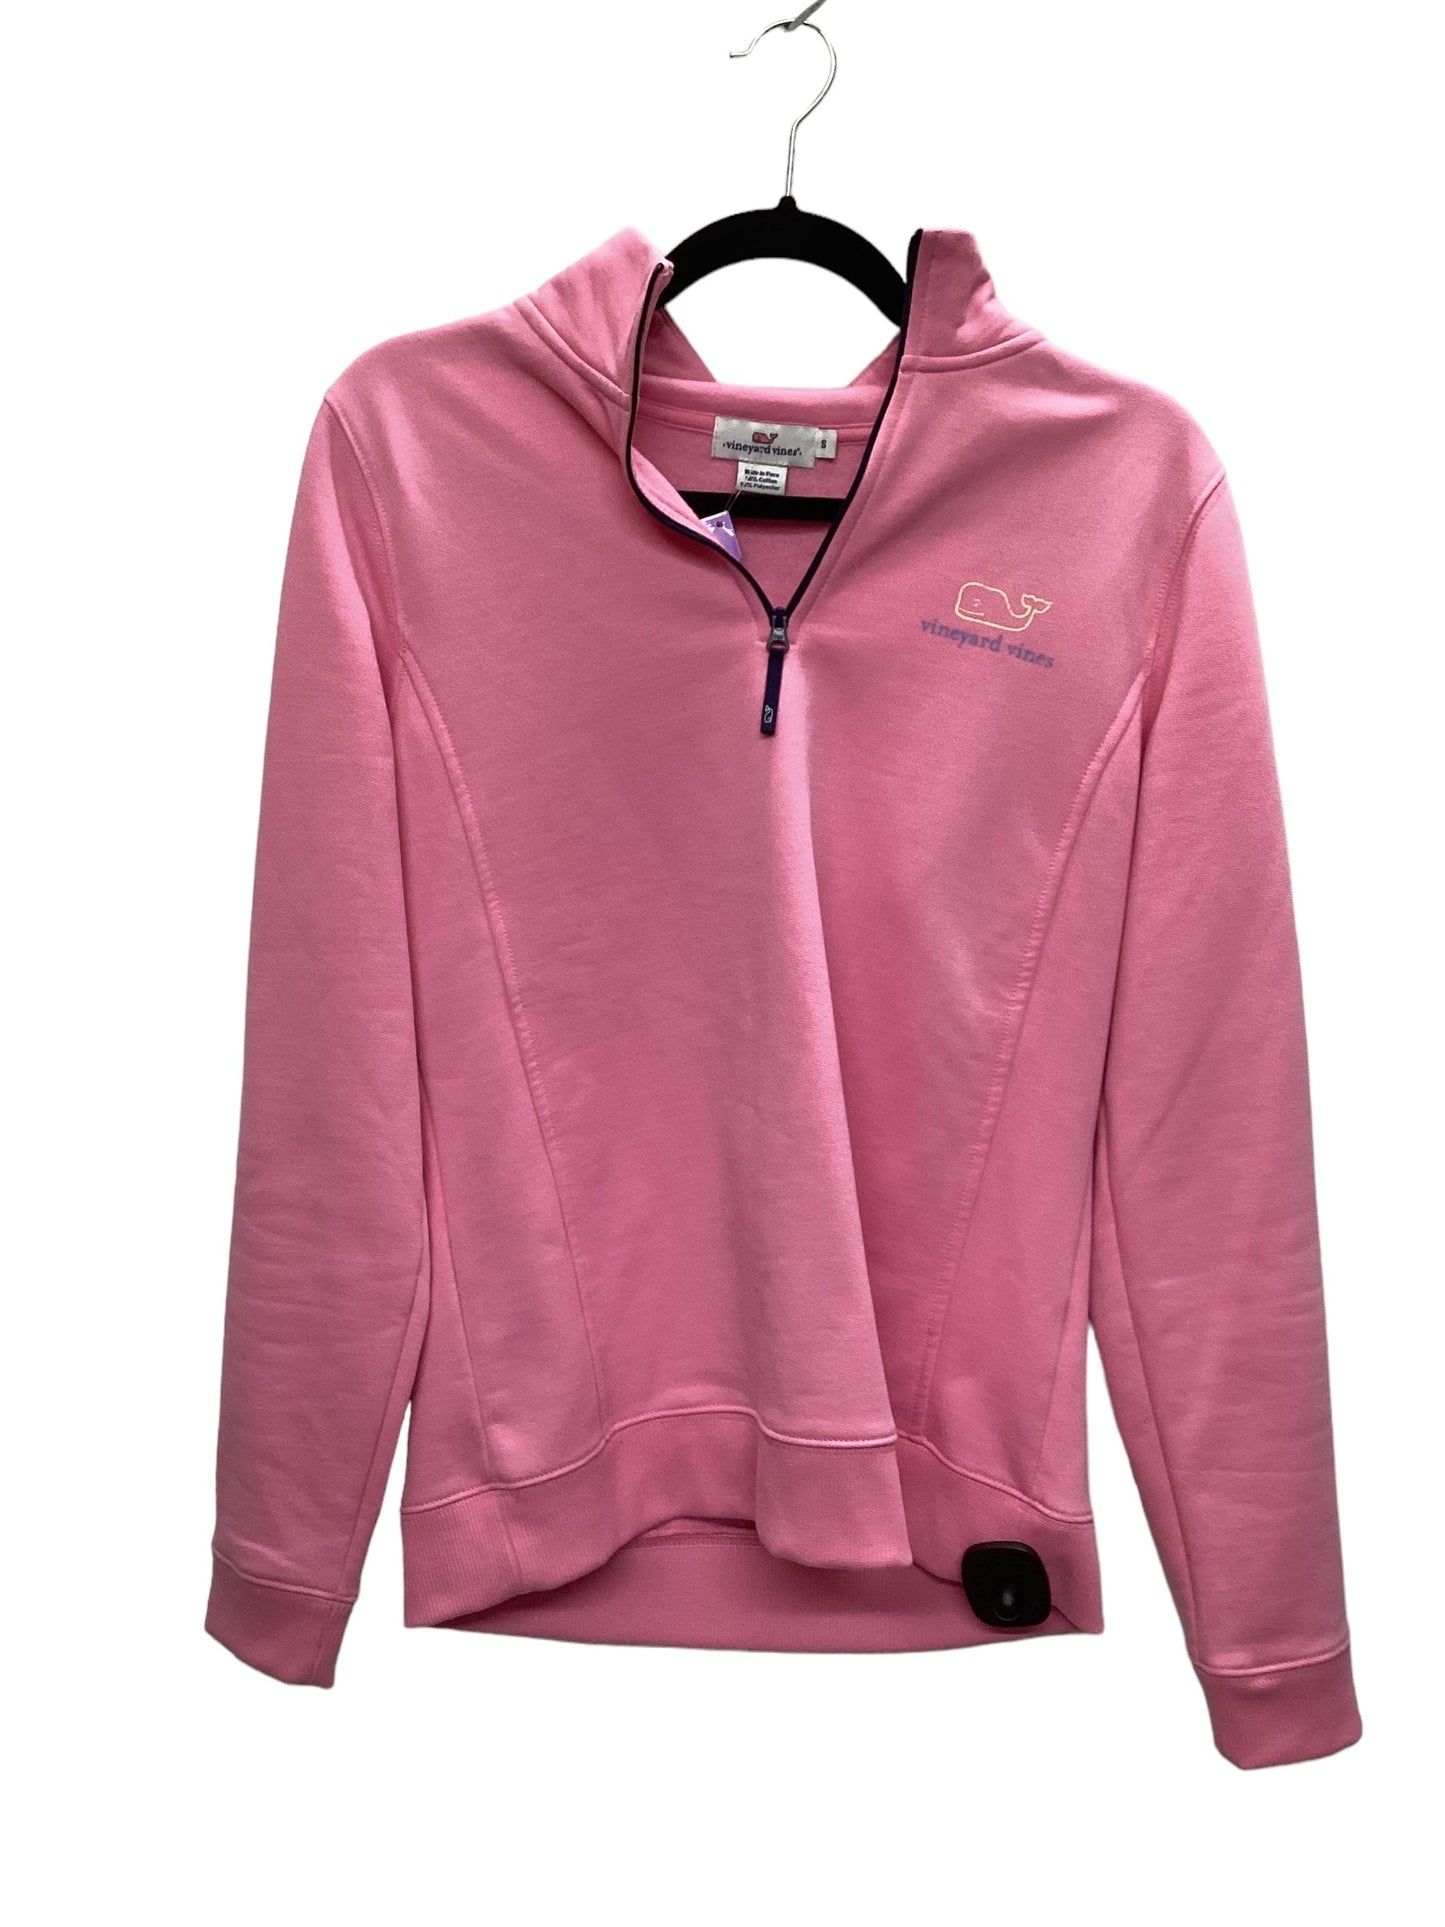 Pink Athletic Jacket Vineyard Vines, Size S